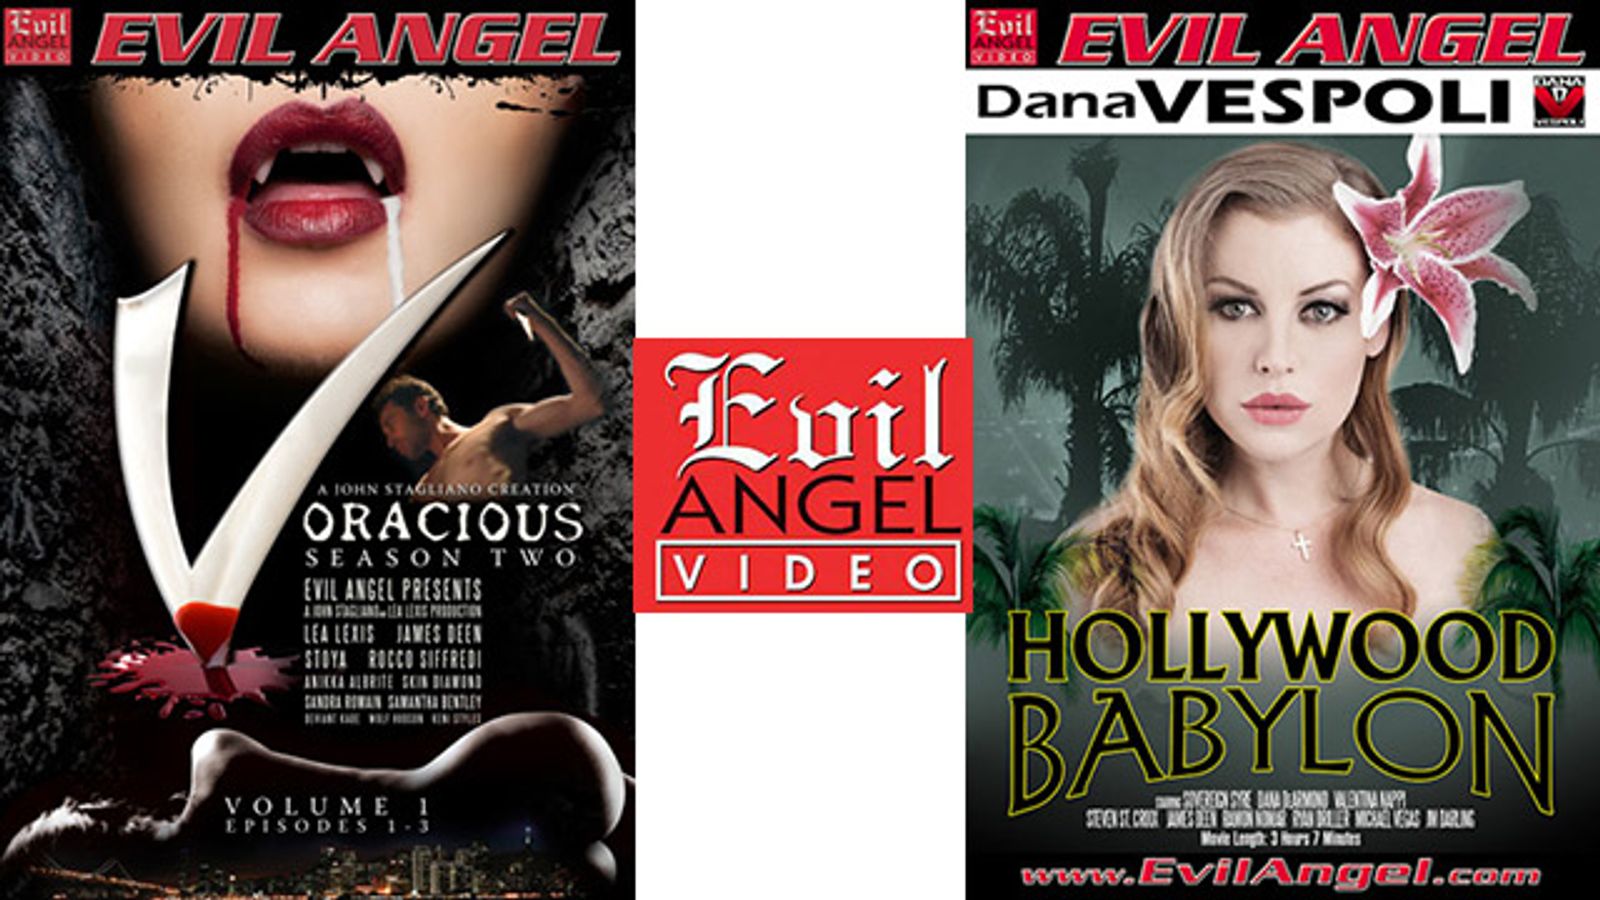 Evil Angel Scores 139 Nominations for 2015 AVN Awards